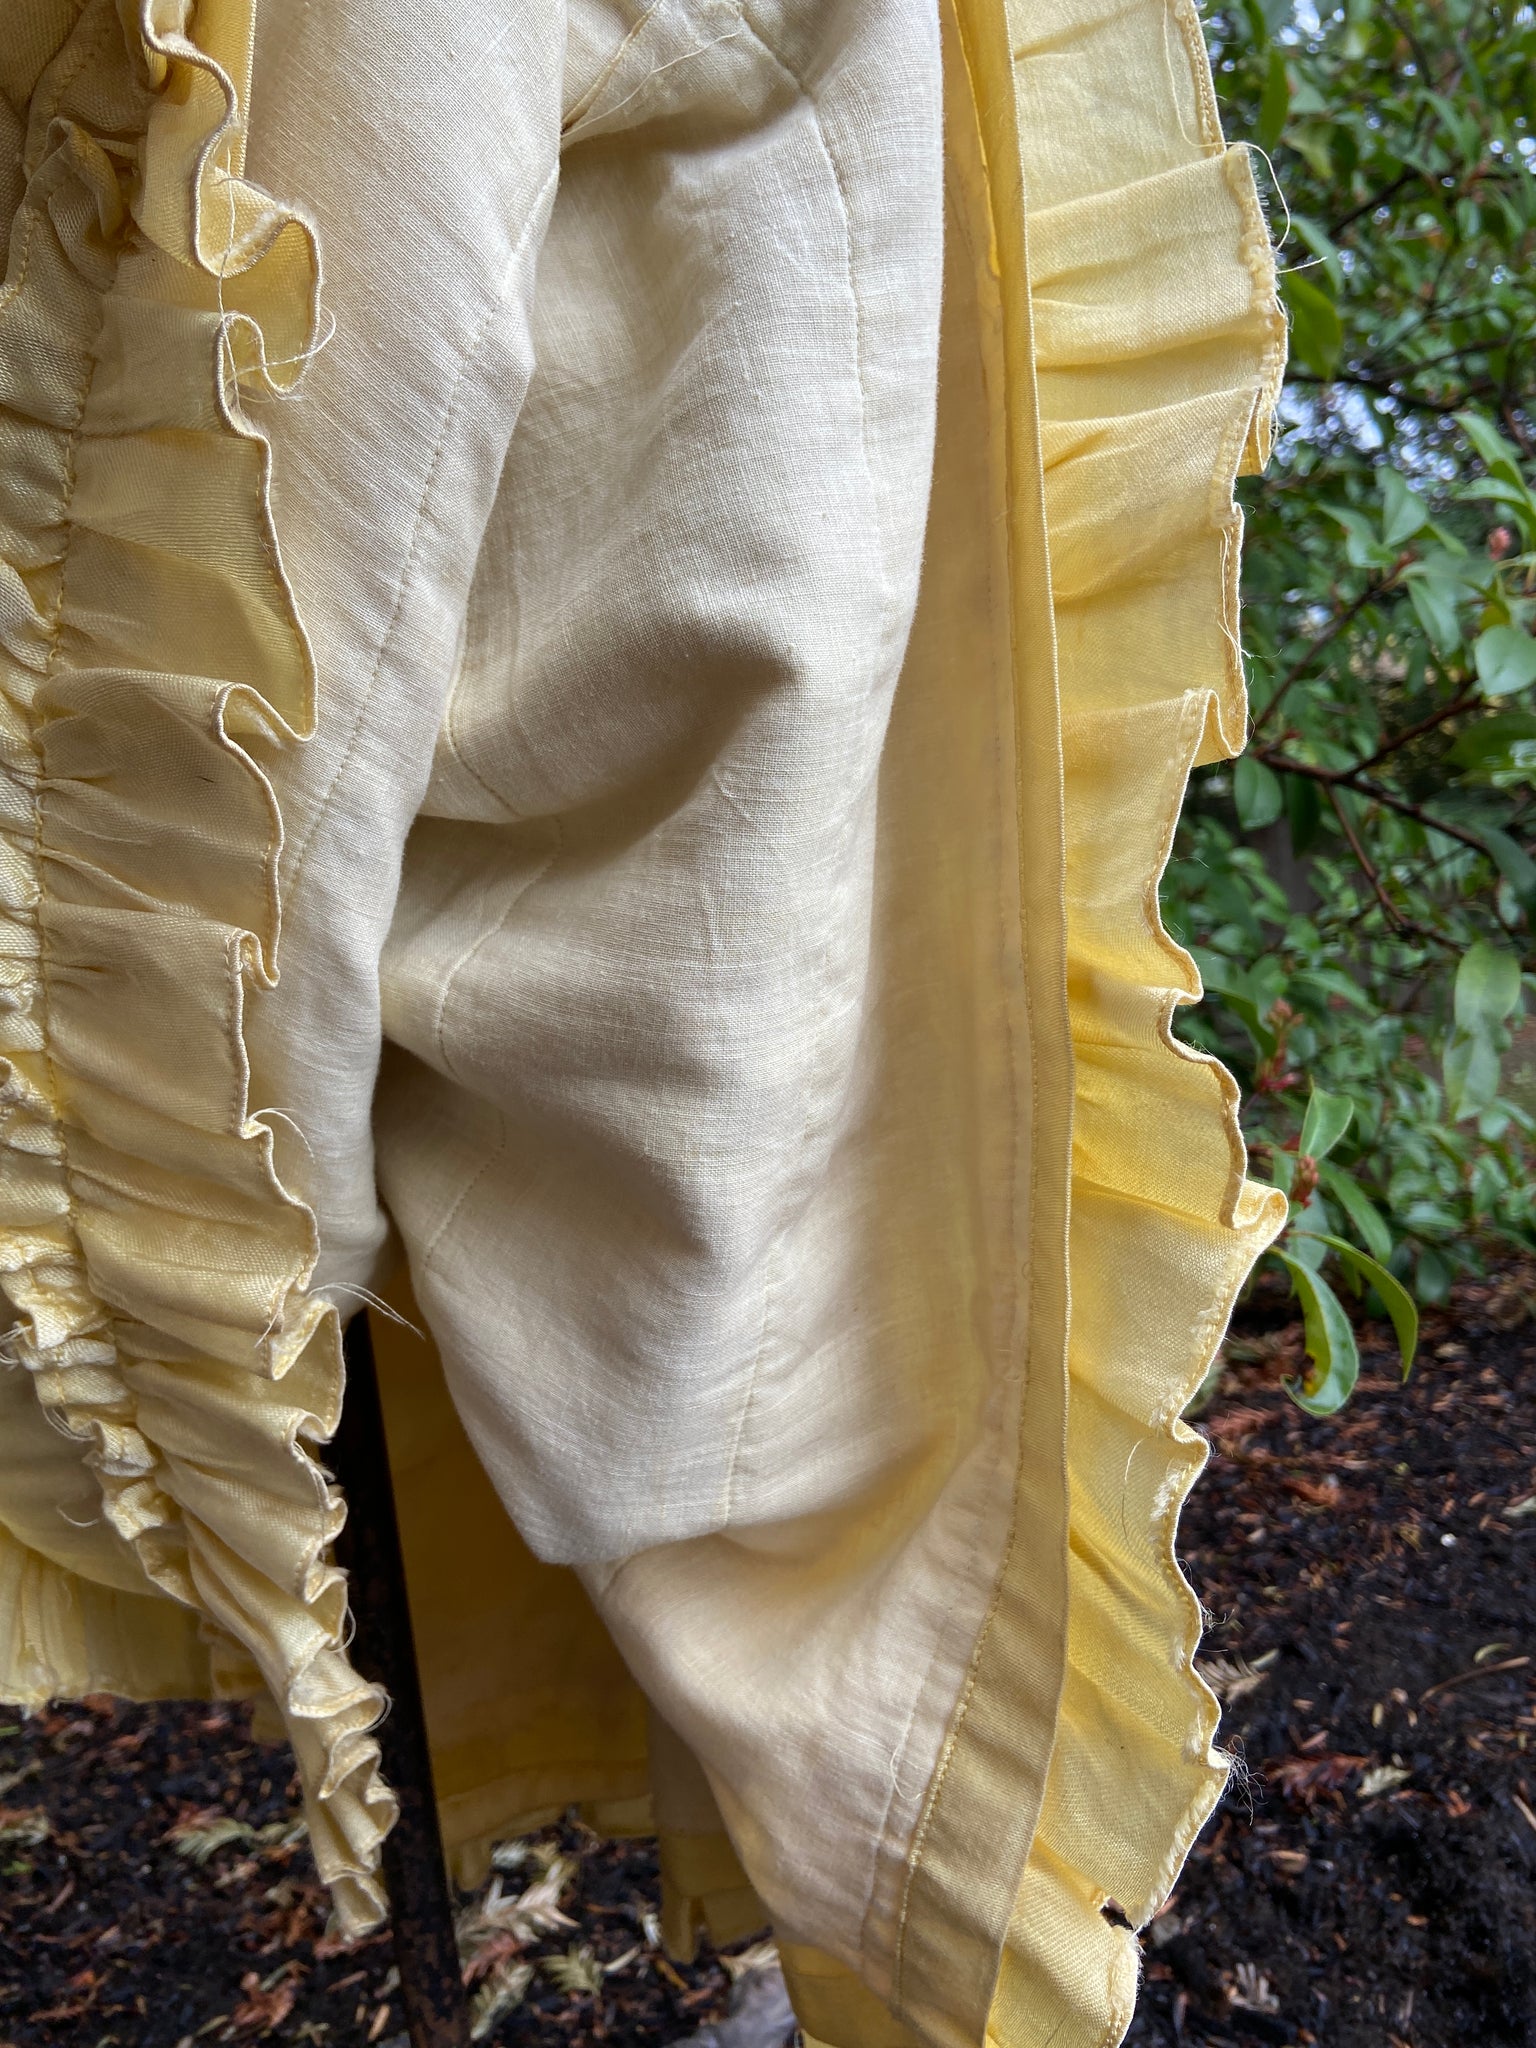 Antique Late Edwardian Golden Messaline Satin Gown